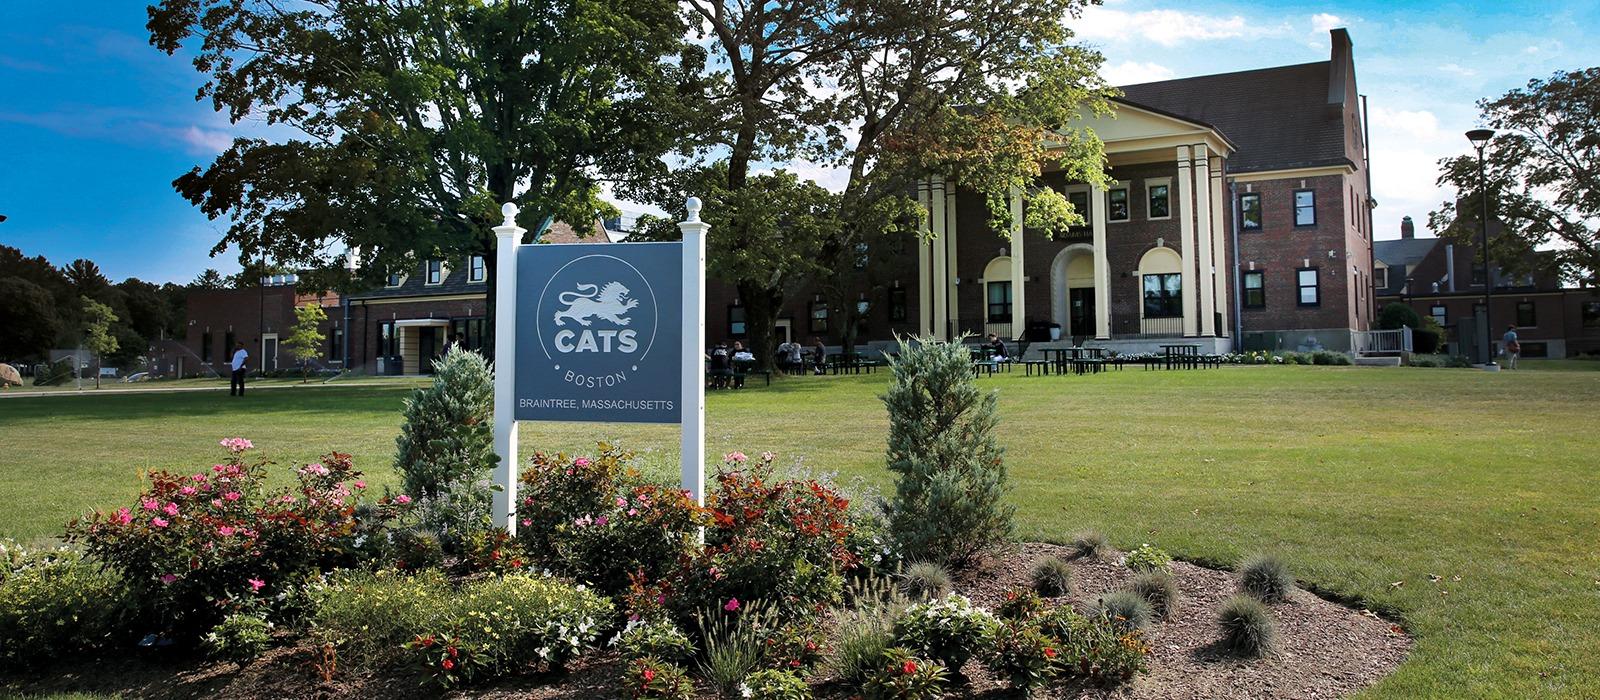 alt - США, Cats Academy, Boston, Среднее образование, 15